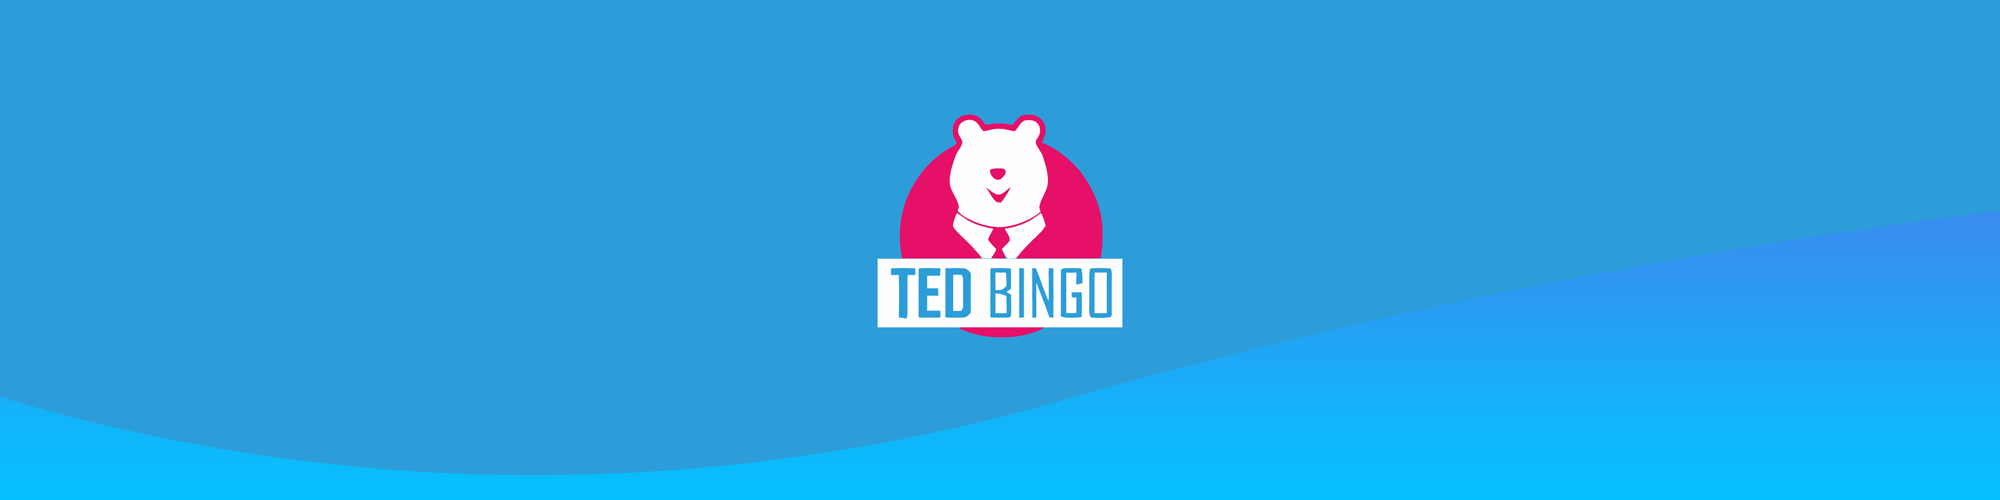 Ted Bingo Alternative on EazeGames